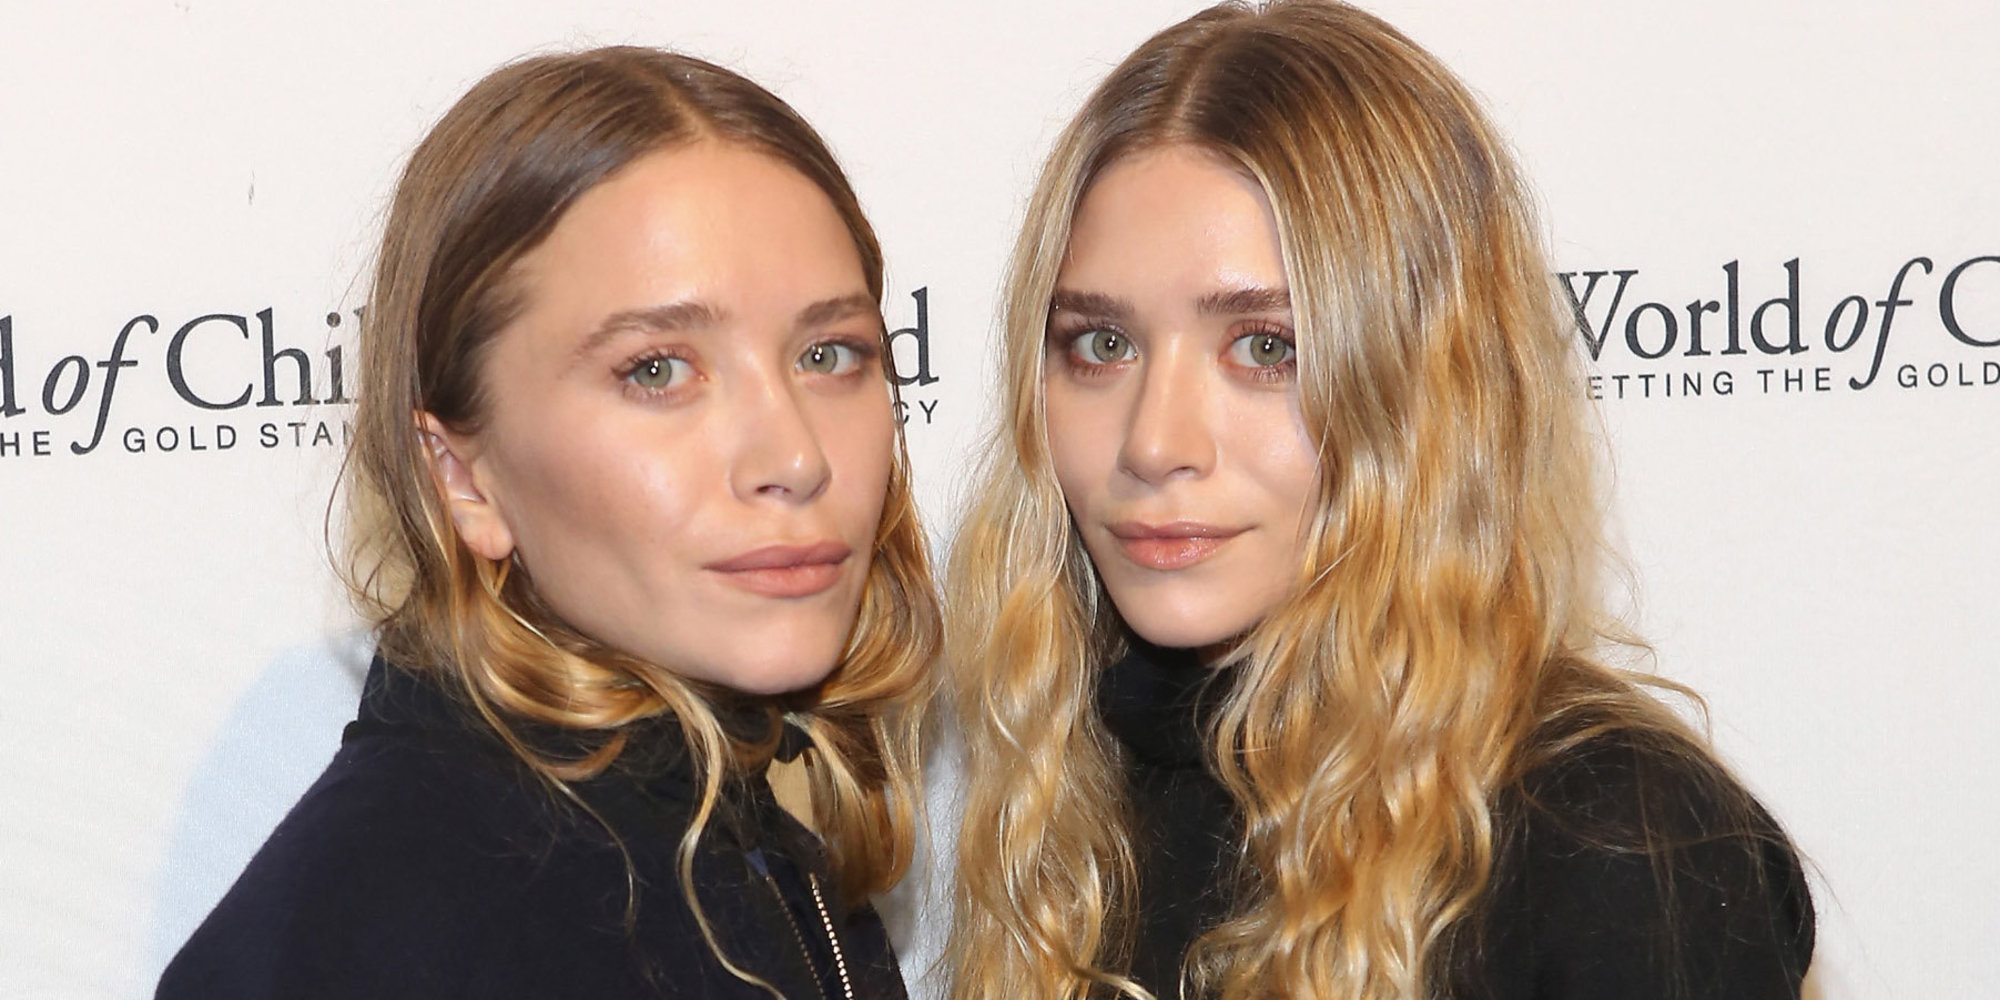 Olsen Twins #2